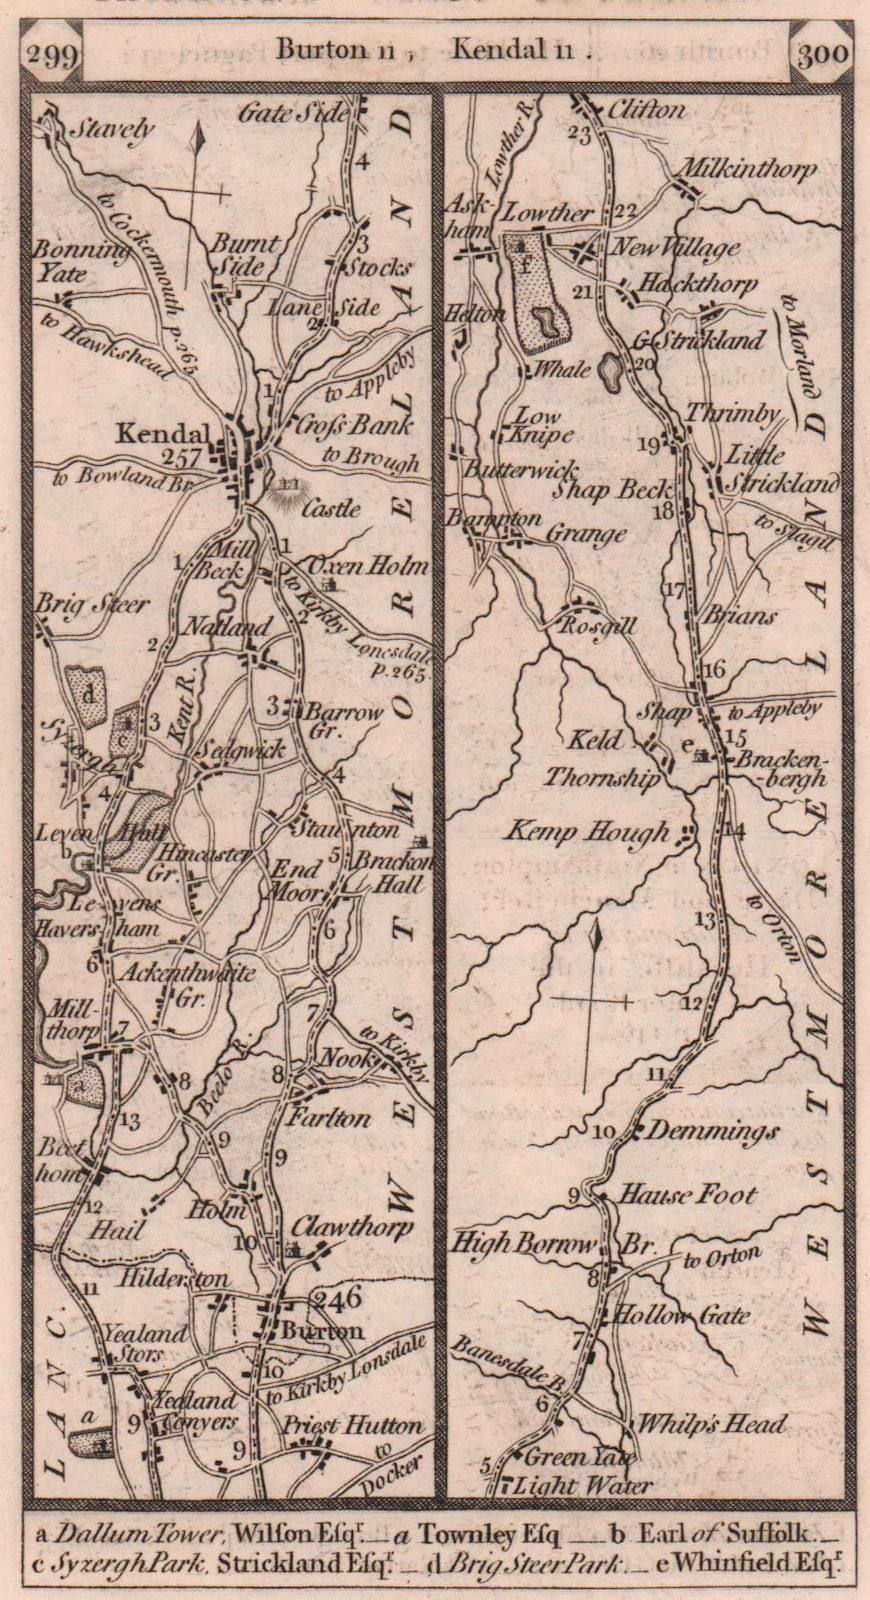 Associate Product Burton-in-Kendal - Kendal - Shap - Melkinthorpe road strip map PATERSON 1803